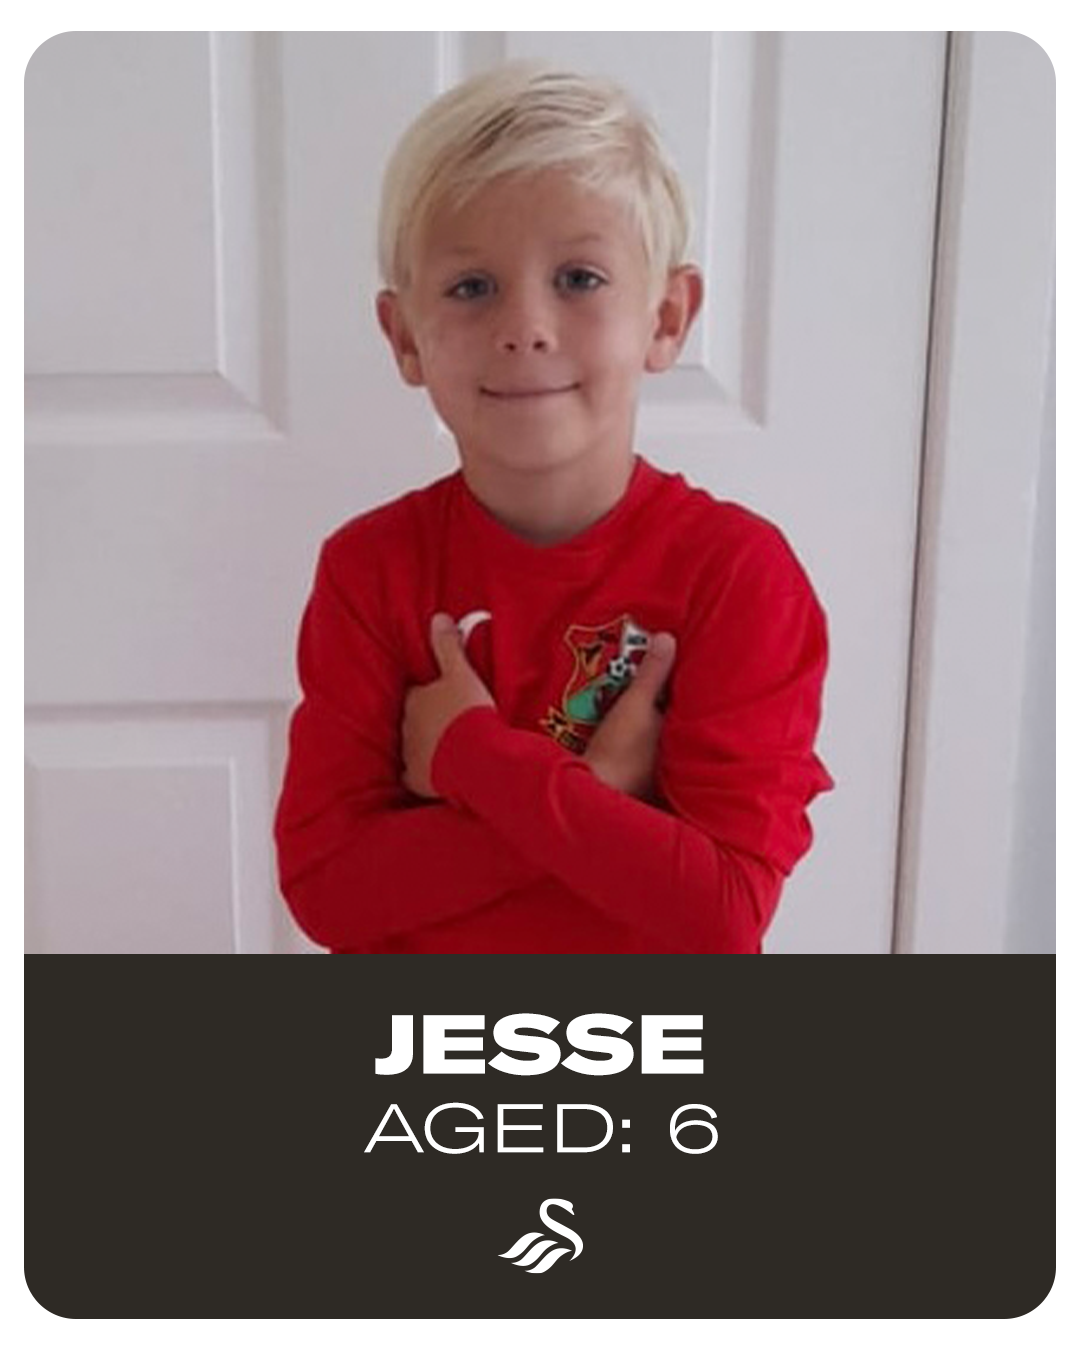 Jesse, Aged 6